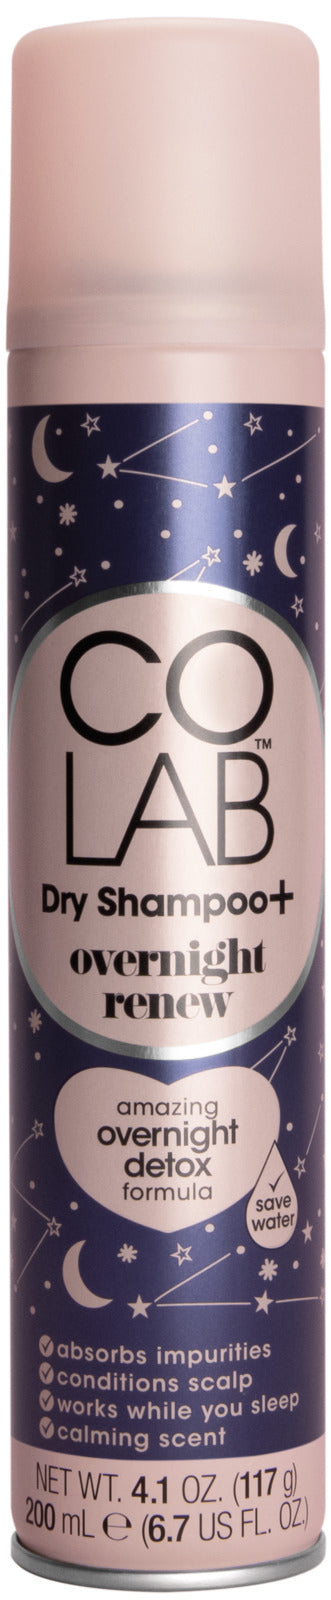 Co Lab: Dry Shampoo - Overnight Renew (200ml)